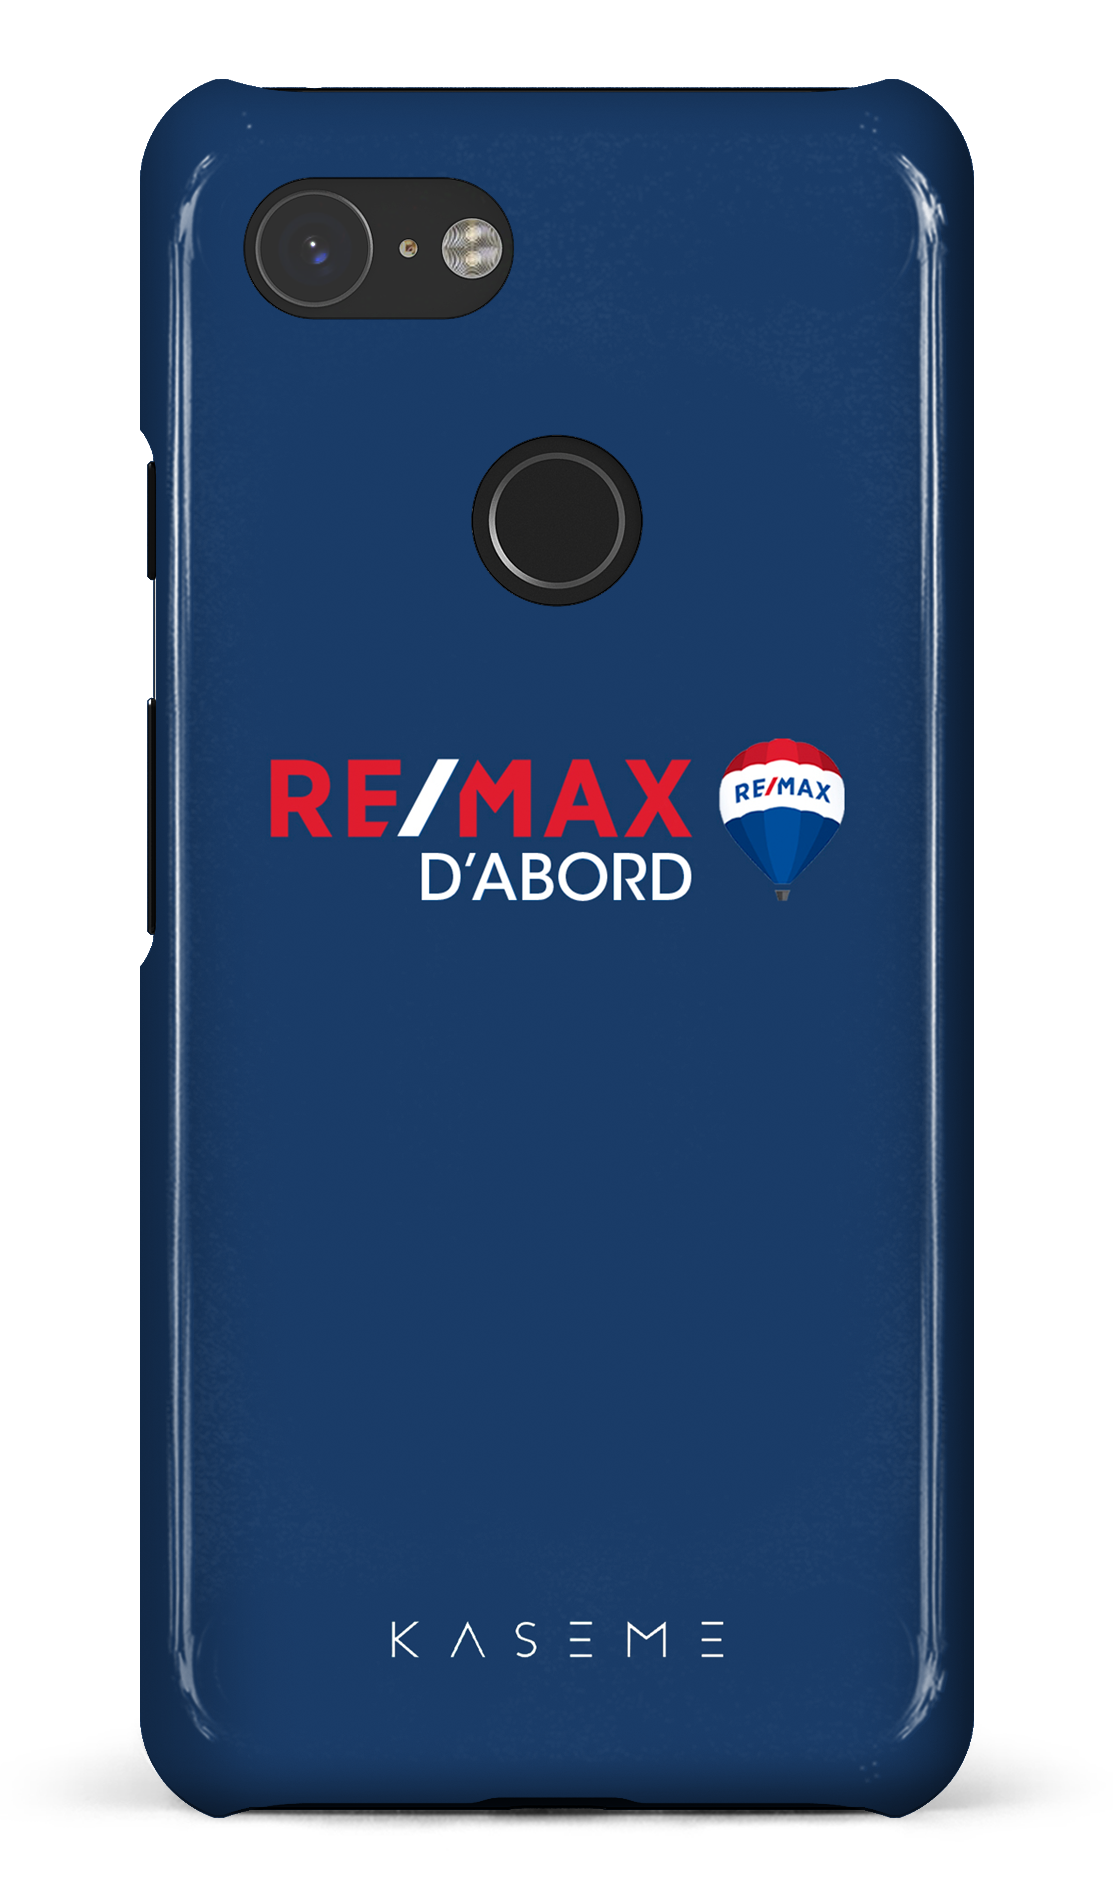 Remax D'abord Bleu - Google Pixel 3